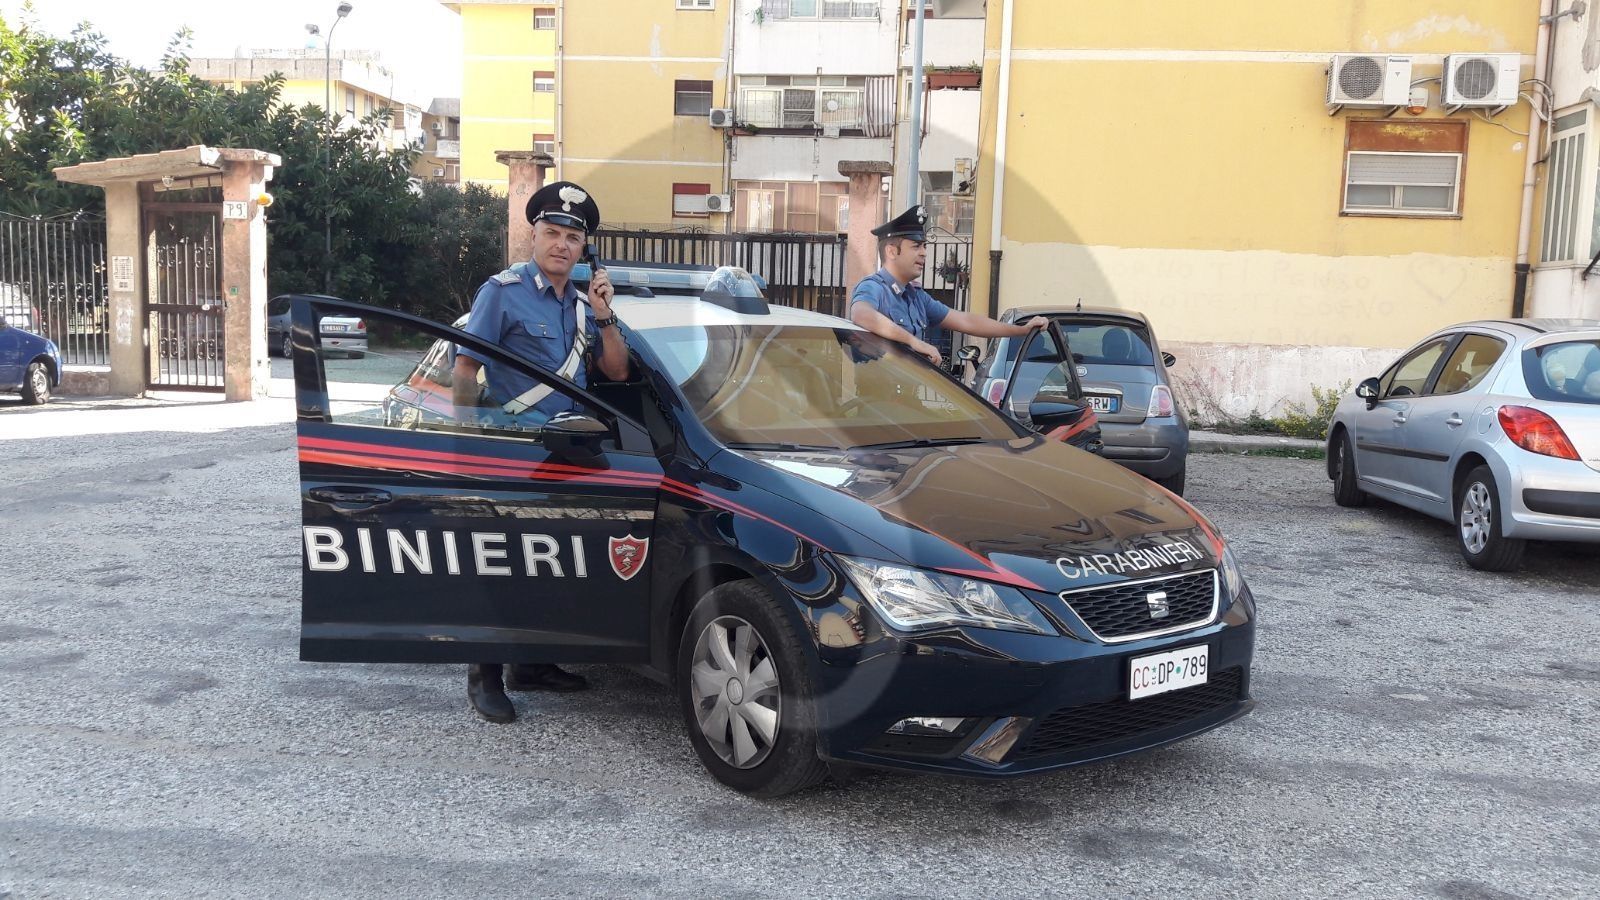 messina.carabinieri vialeGazzi sicilians